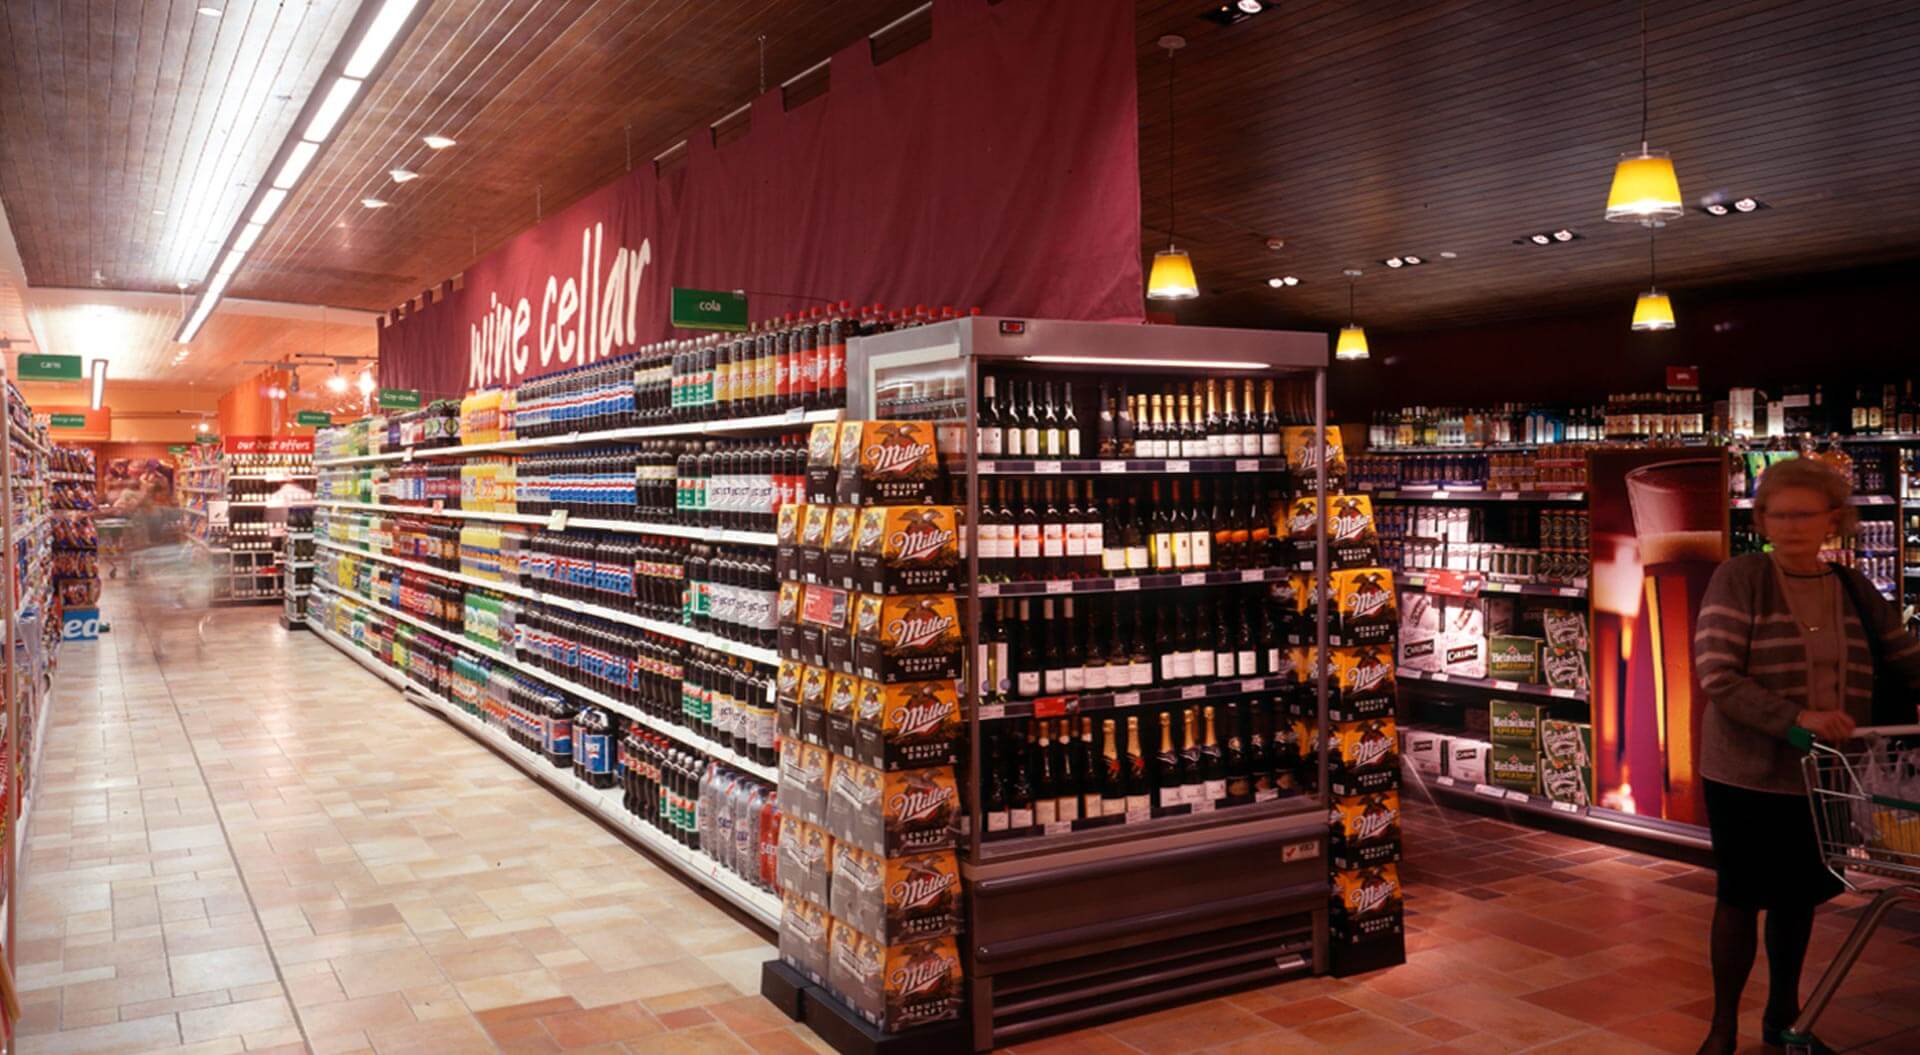 Safeway supermarket interior store design, merchandising display systems and branding for the wine cellar